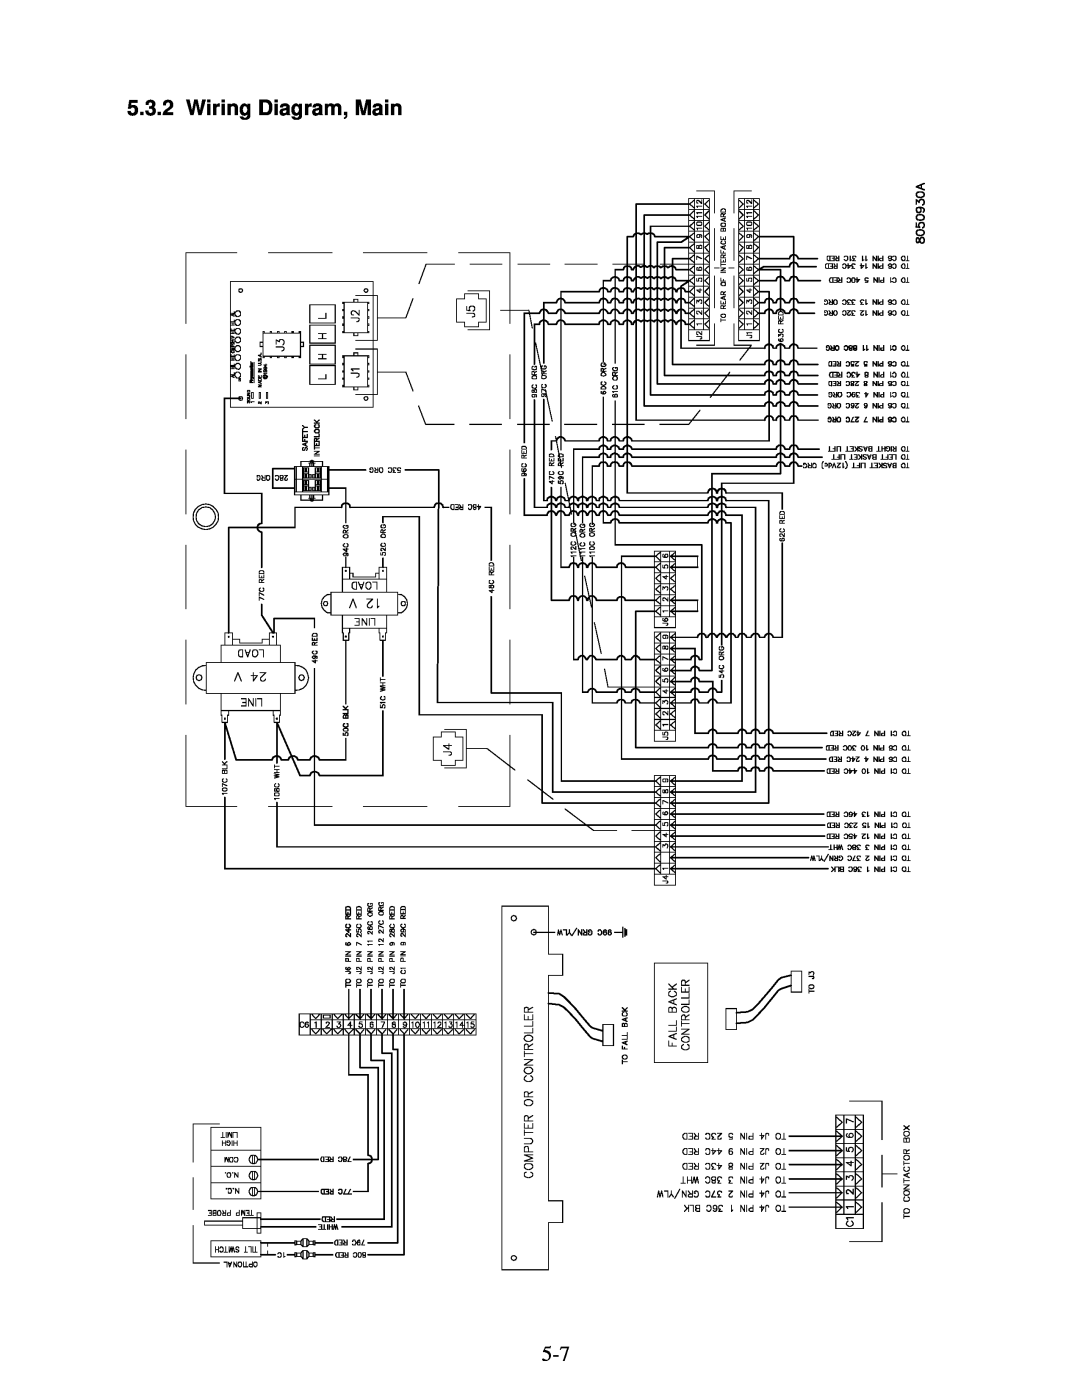 Frymaster H20.5 SERIES manual Wiring Diagram, Main 